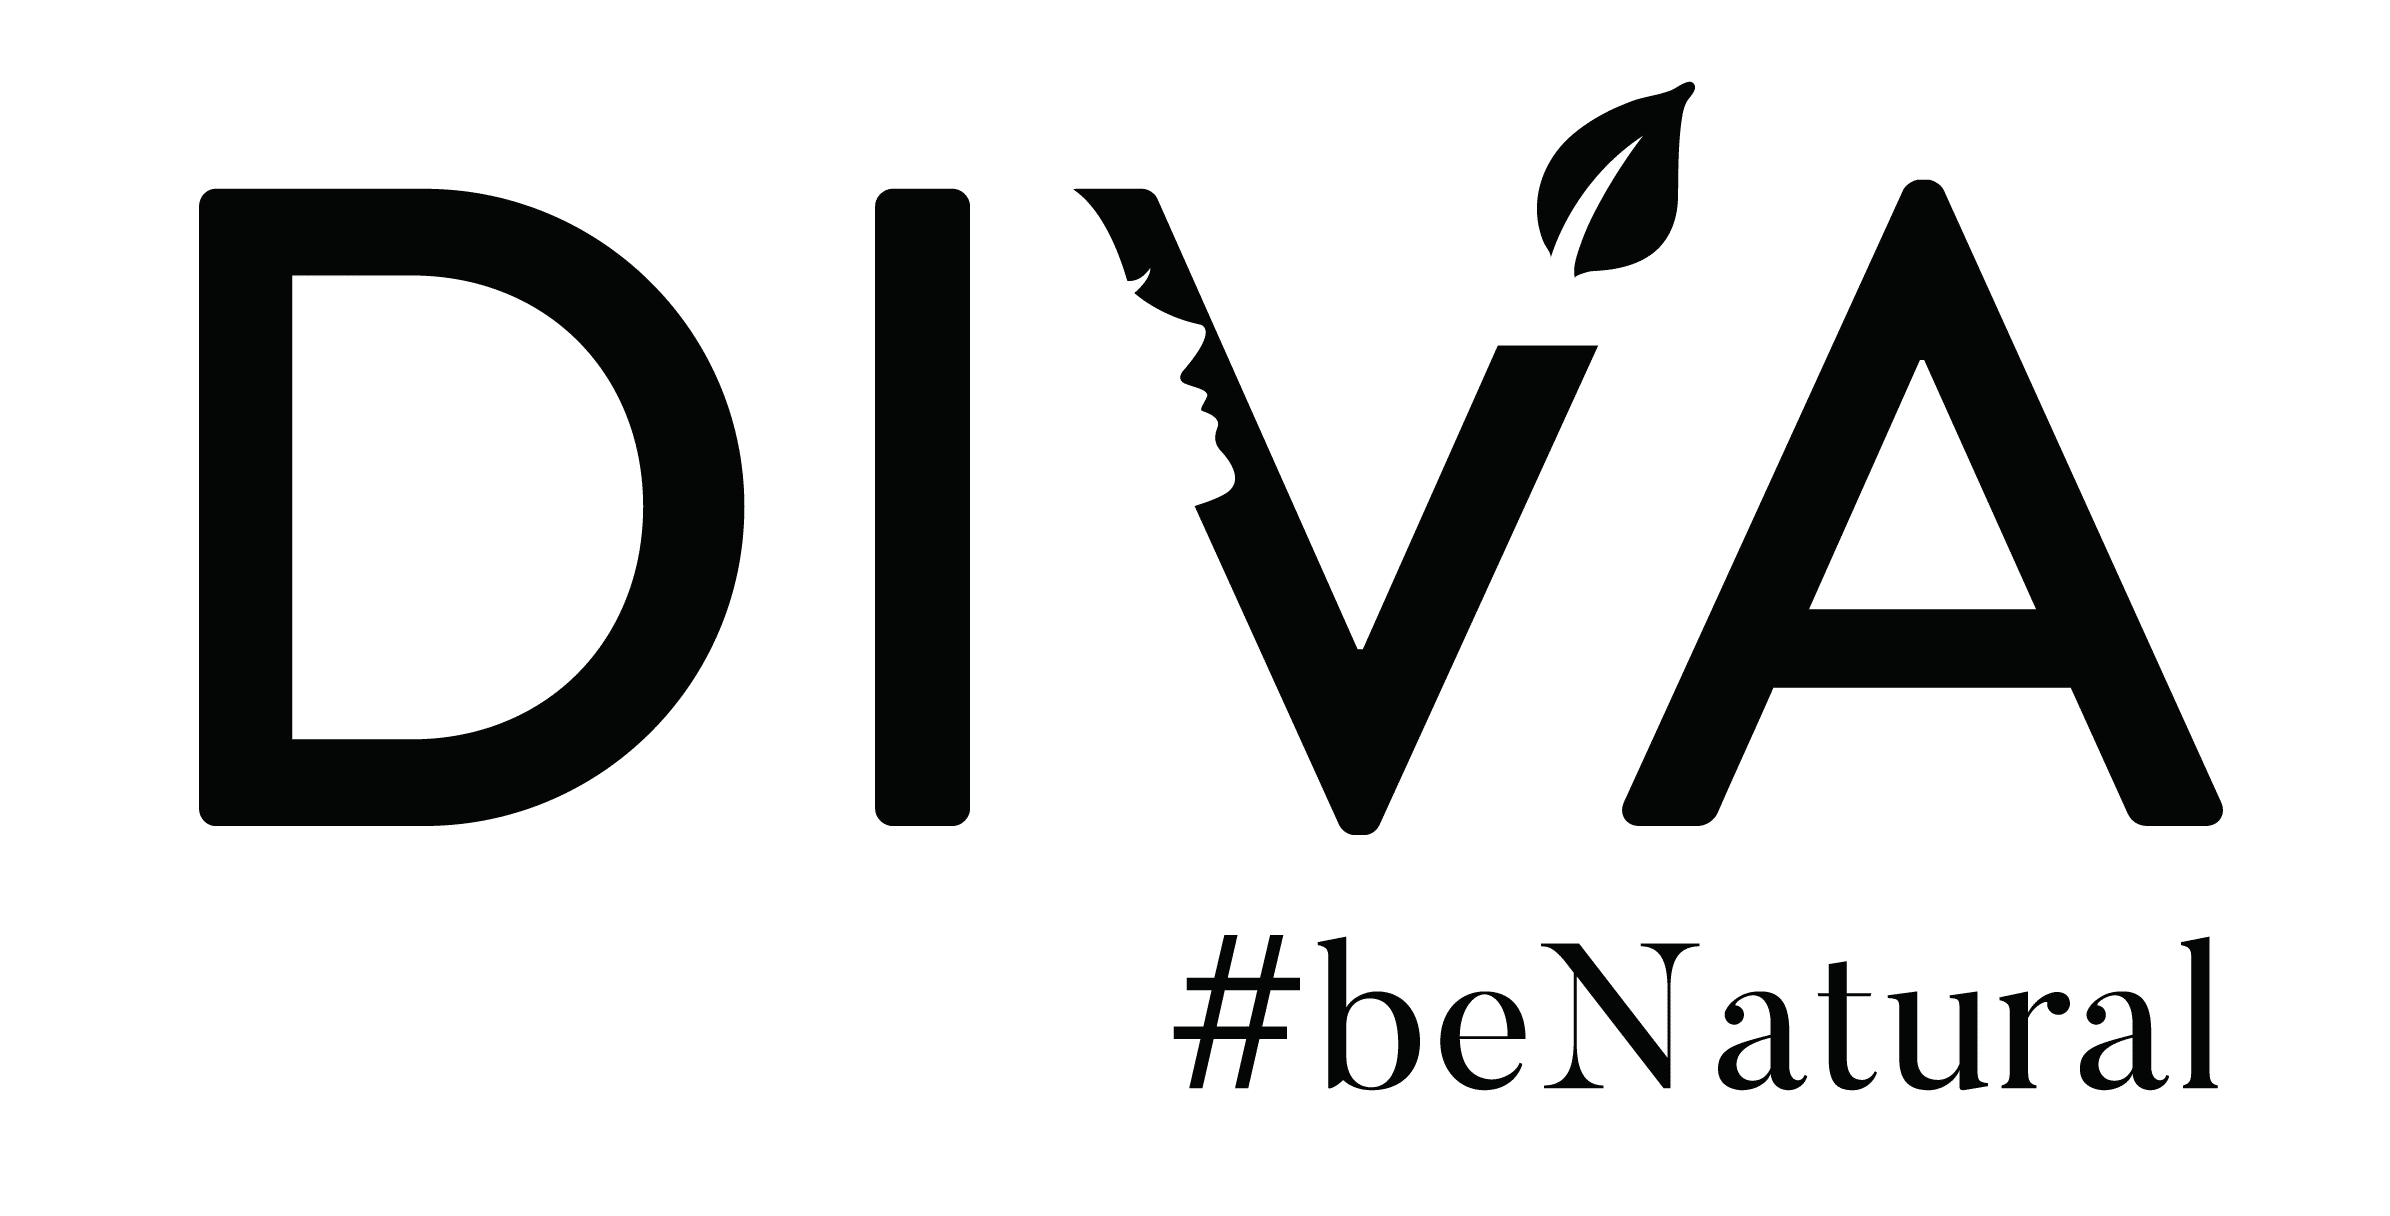 Diva – Be Natural